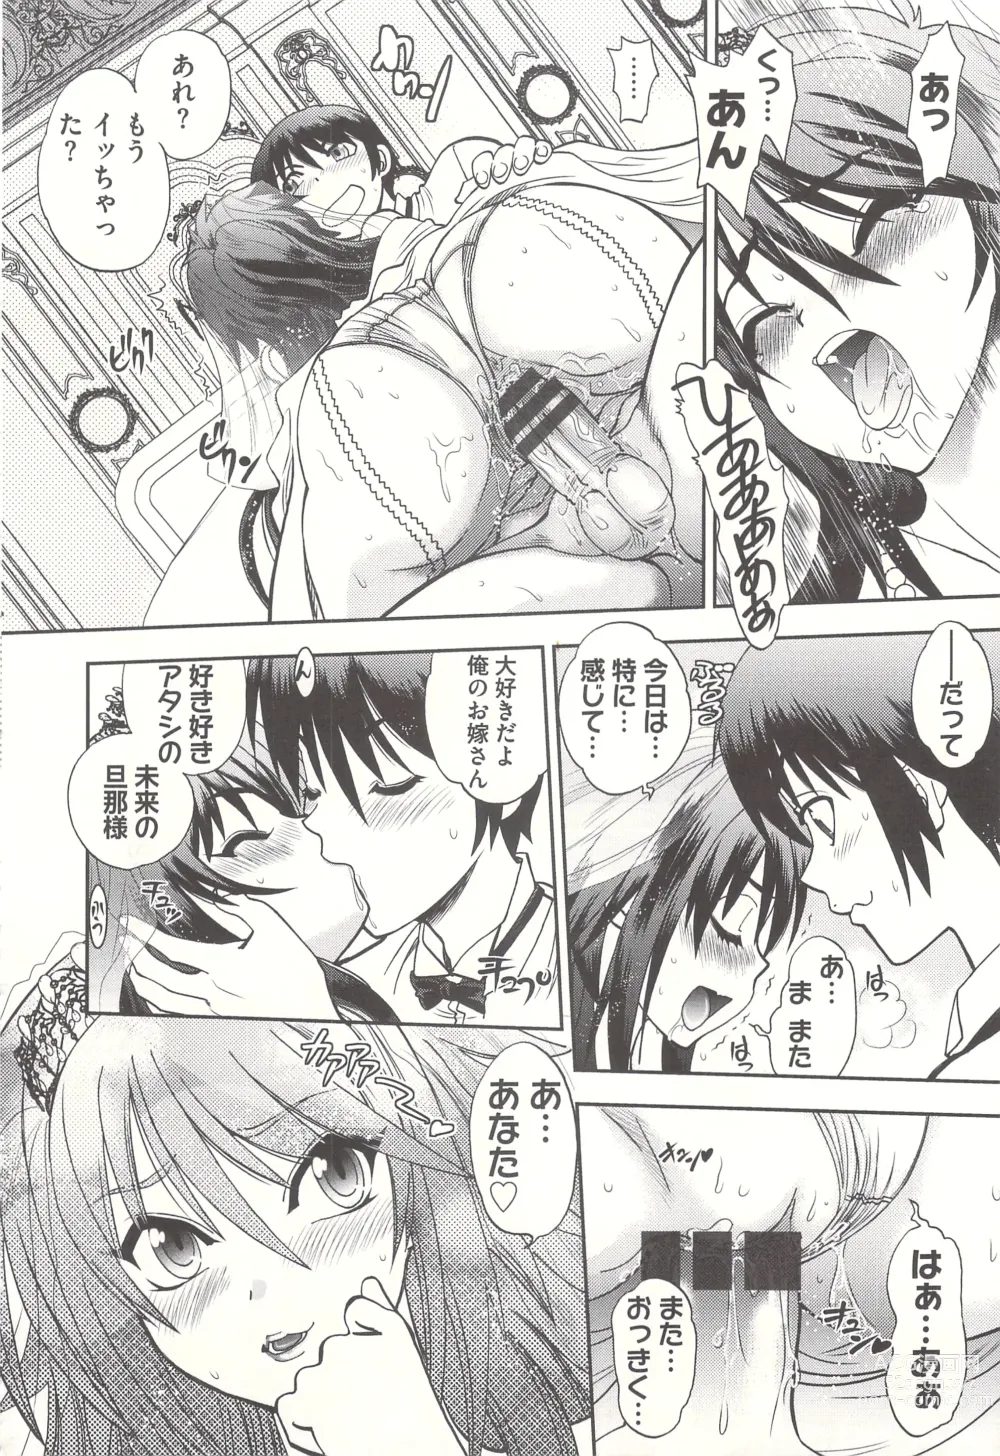 Page 204 of manga Tsujidou-san no Virgin Road Adult Edition